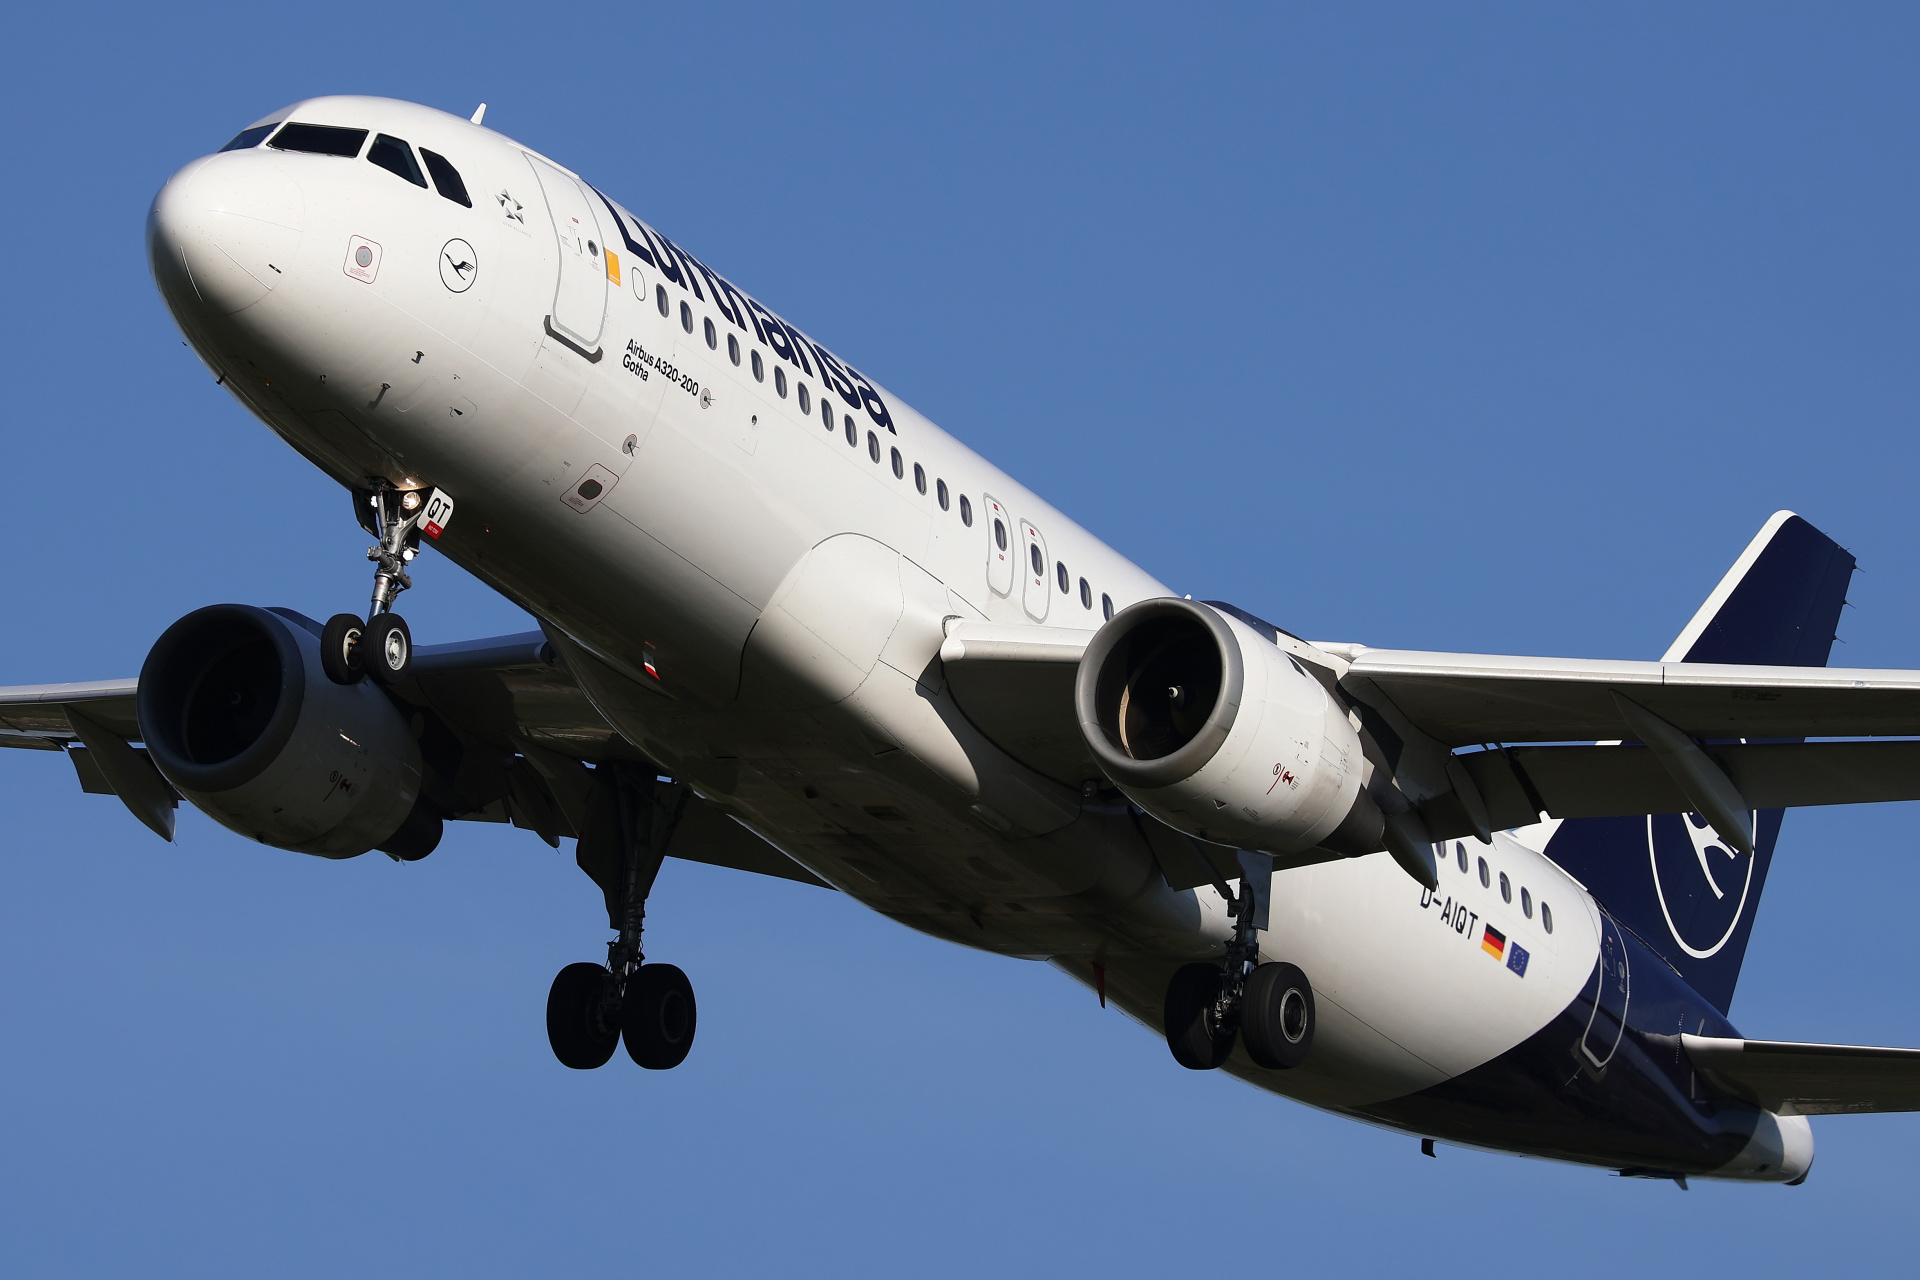 D-AIQT (new livery) (Aircraft » EPWA Spotting » Airbus A320-200 » Lufthansa)